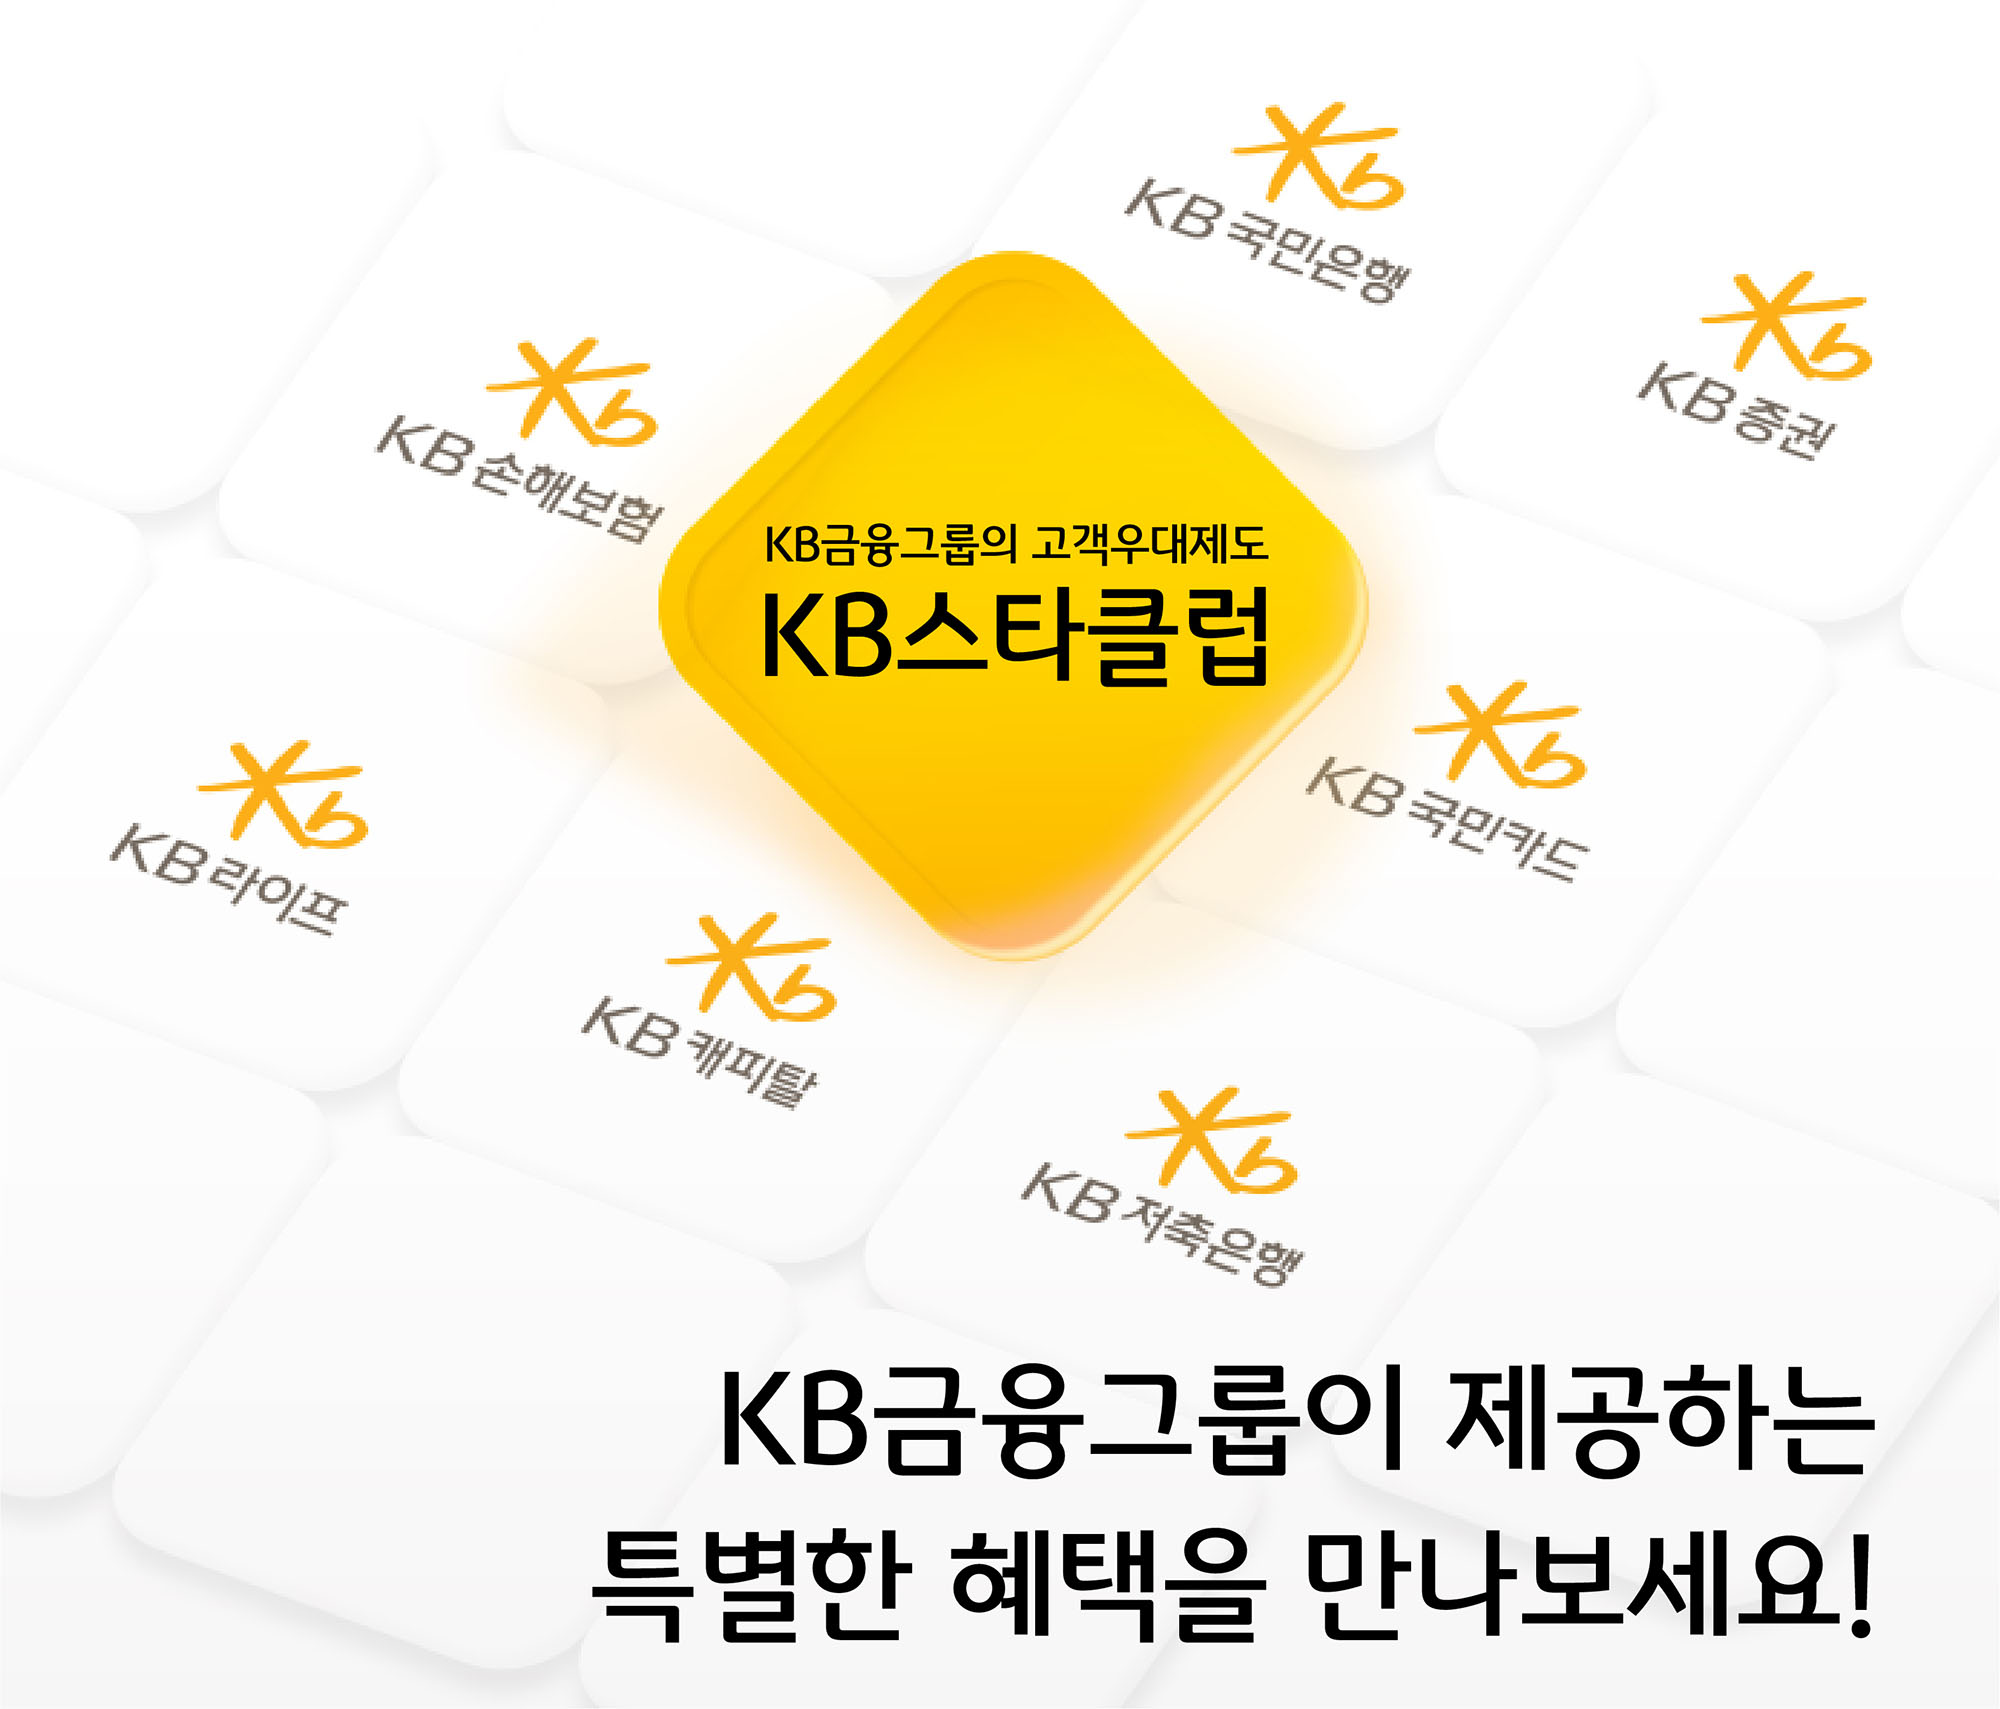 KB Star Club’s reorganization image